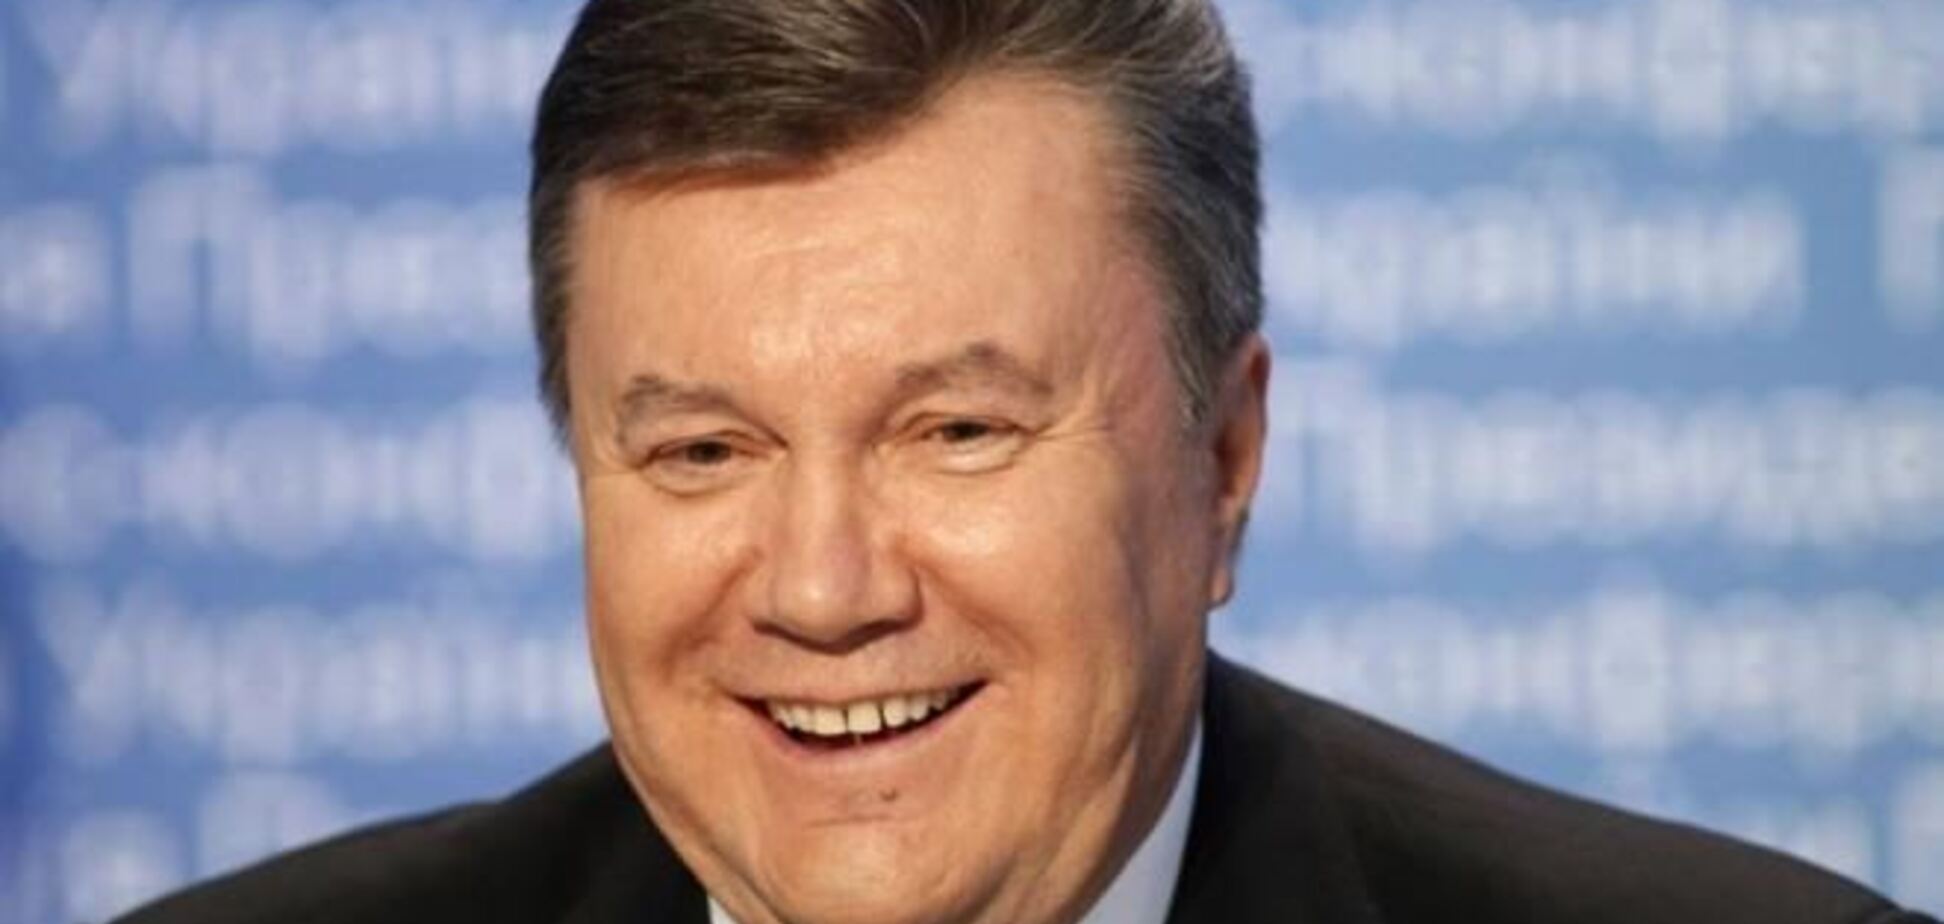 Януковича в России нет, заявили в Совете Федераций РФ